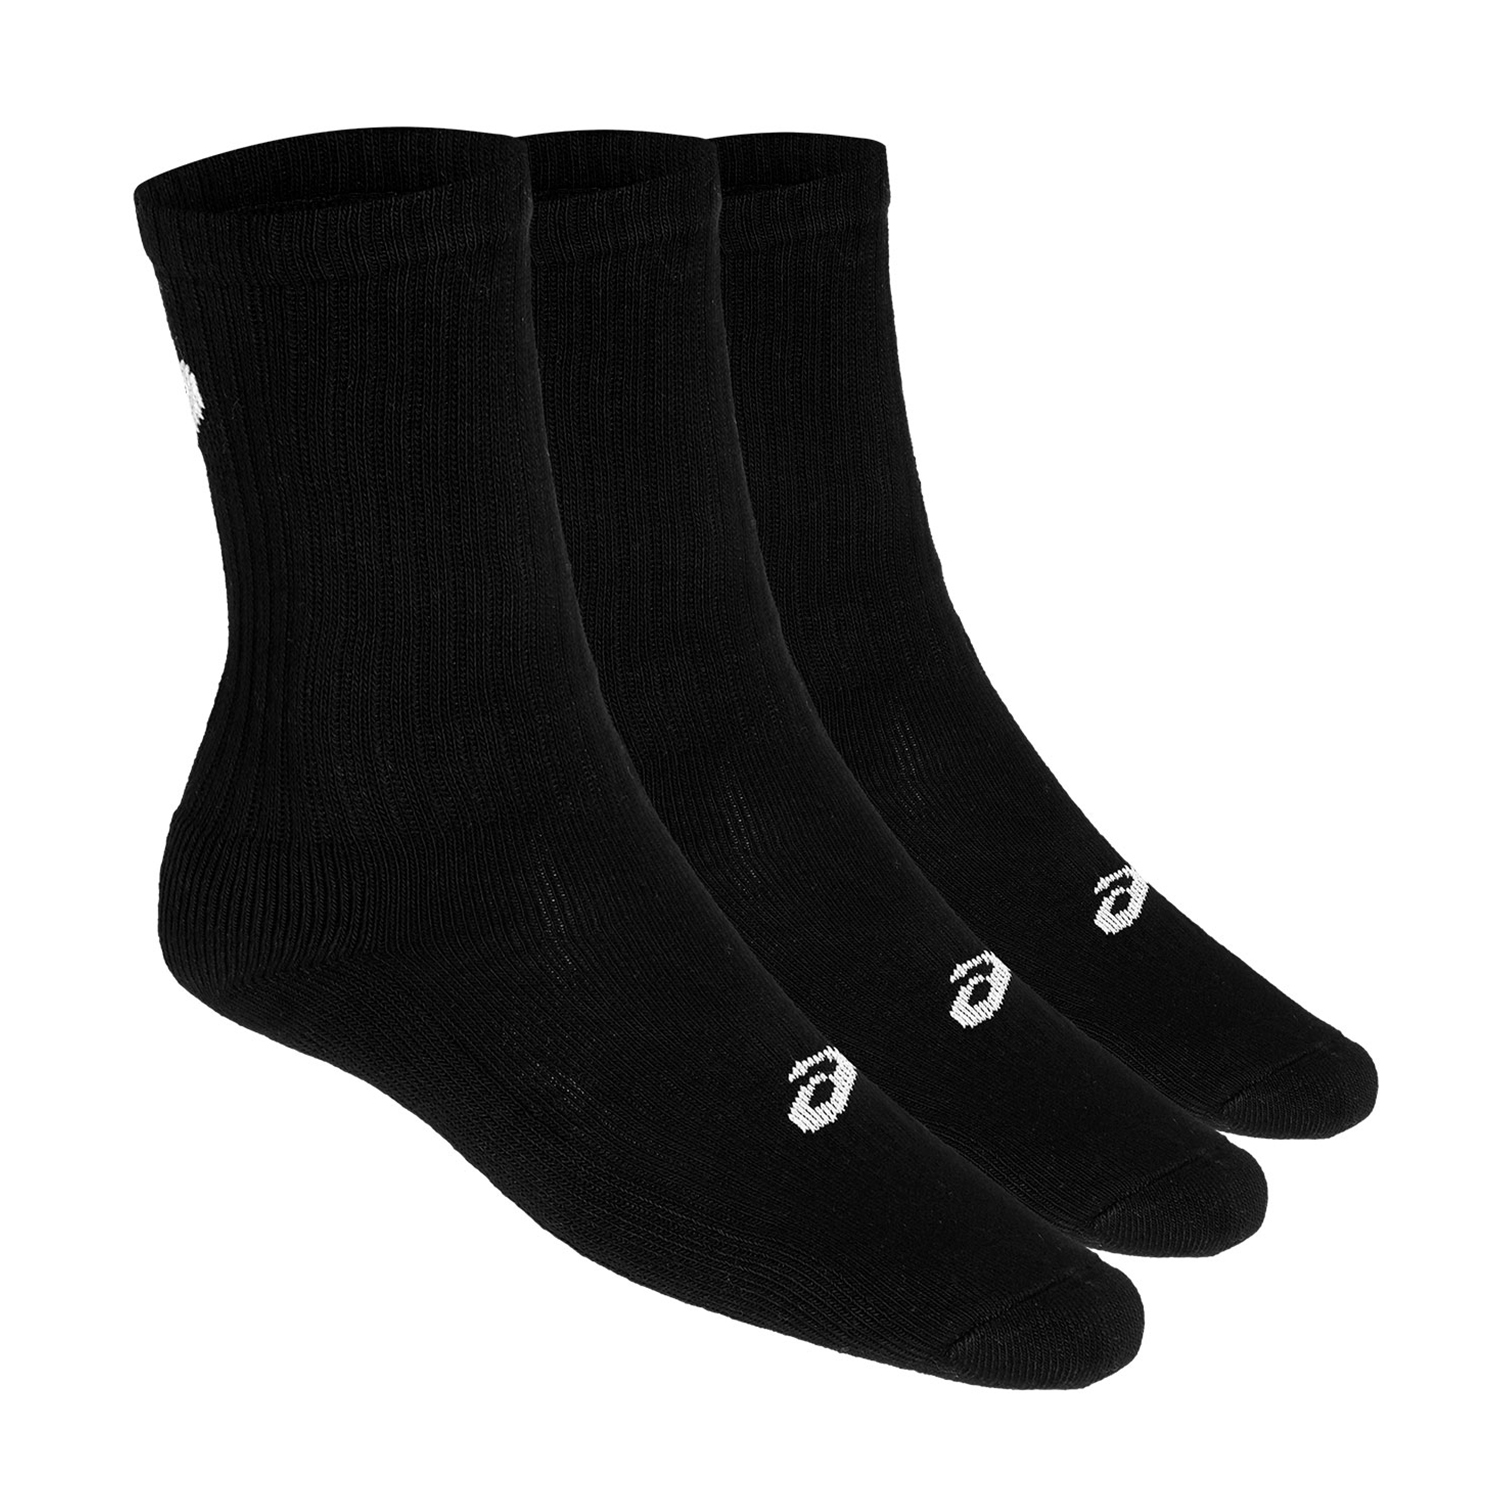 Asics Crew Motion Dry x 3 Socks - Black